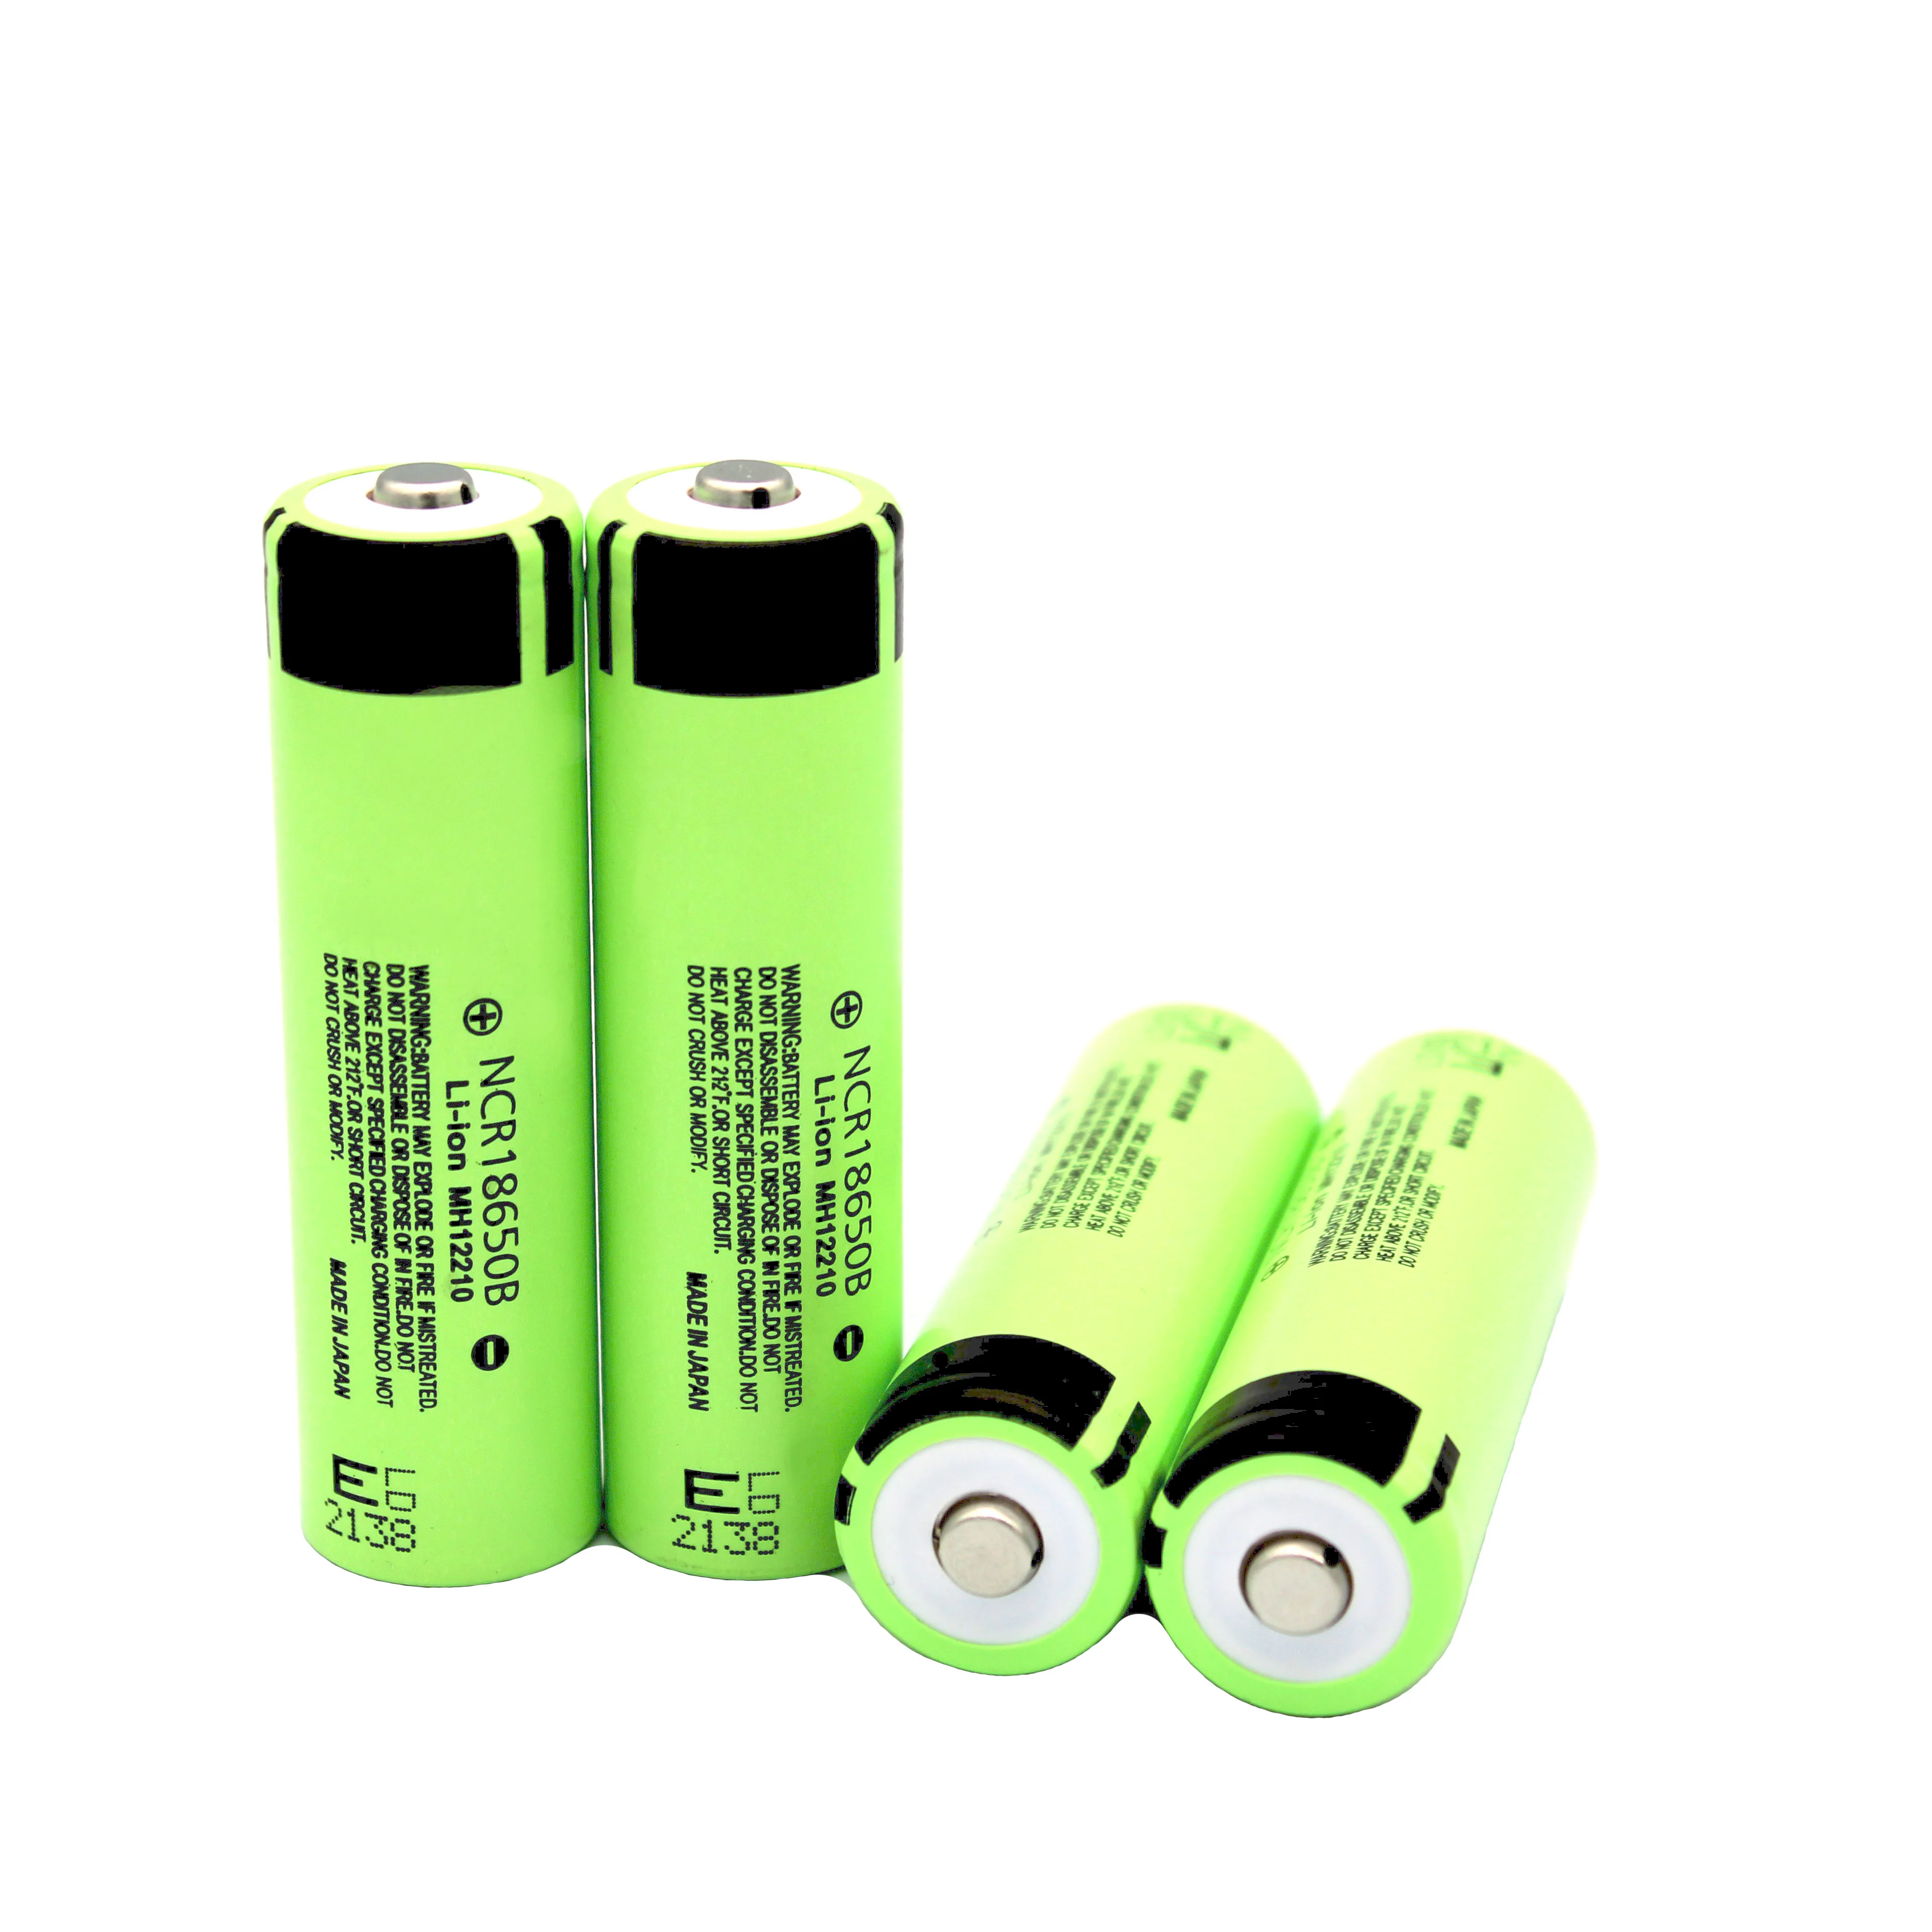 

100% Original recargable bateria nueva 18650,3400 mah. 3,7V bateria de litio NCR18650B.3400mah bateria.de linterna Taschenlampe.